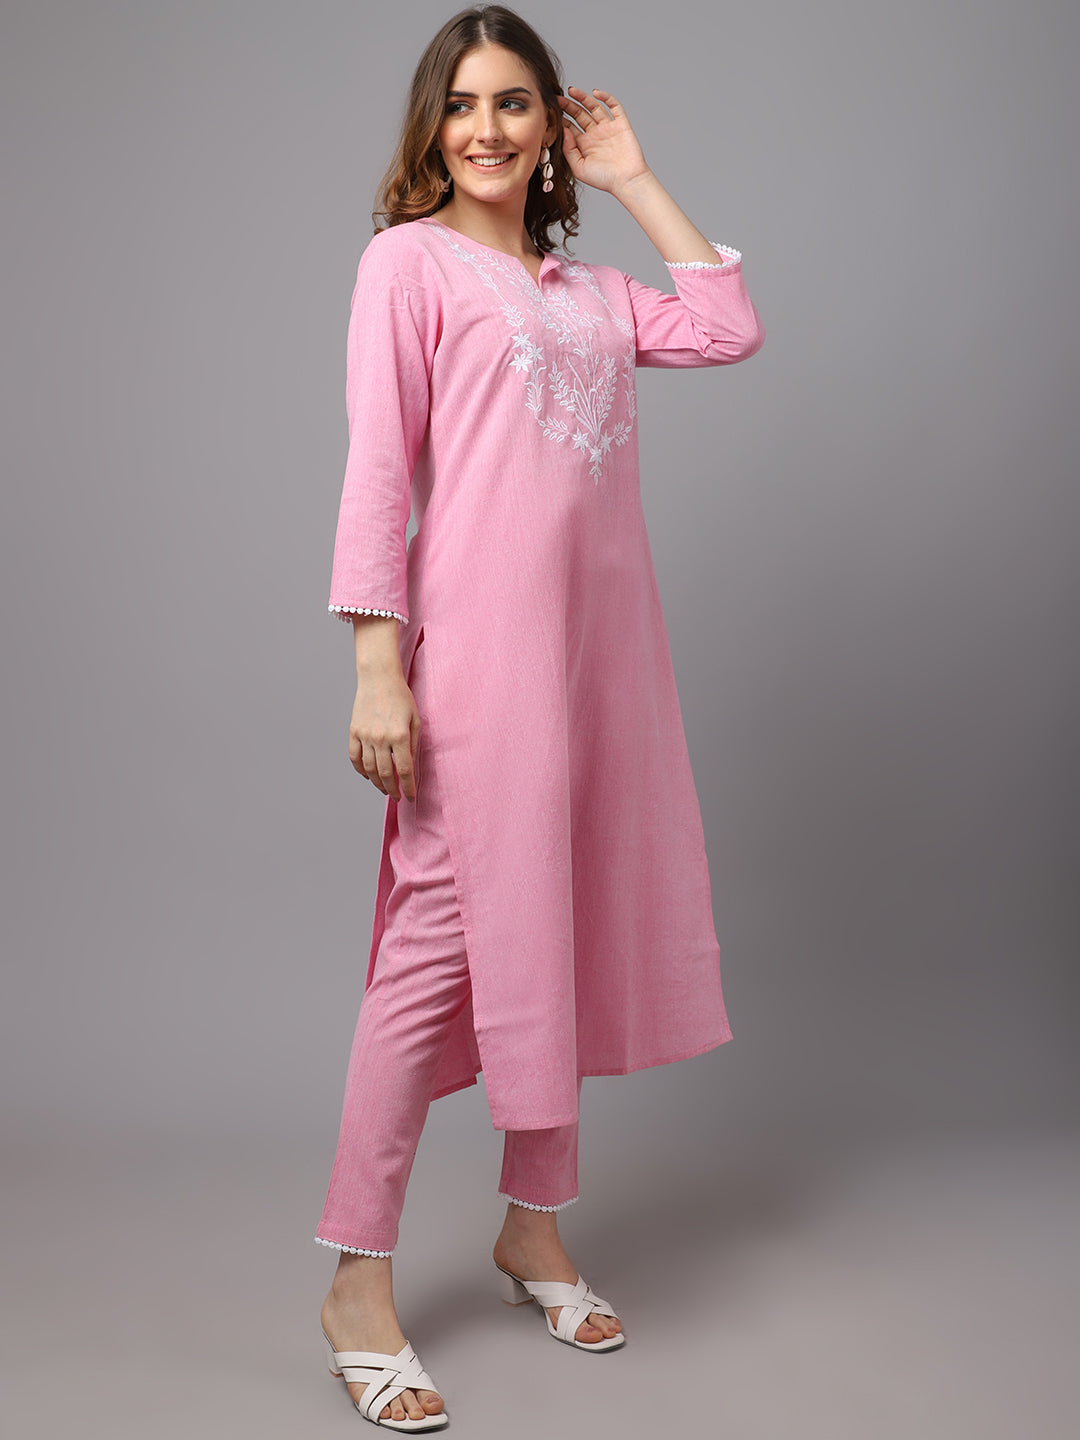 Pastle pink embroidered kurta set